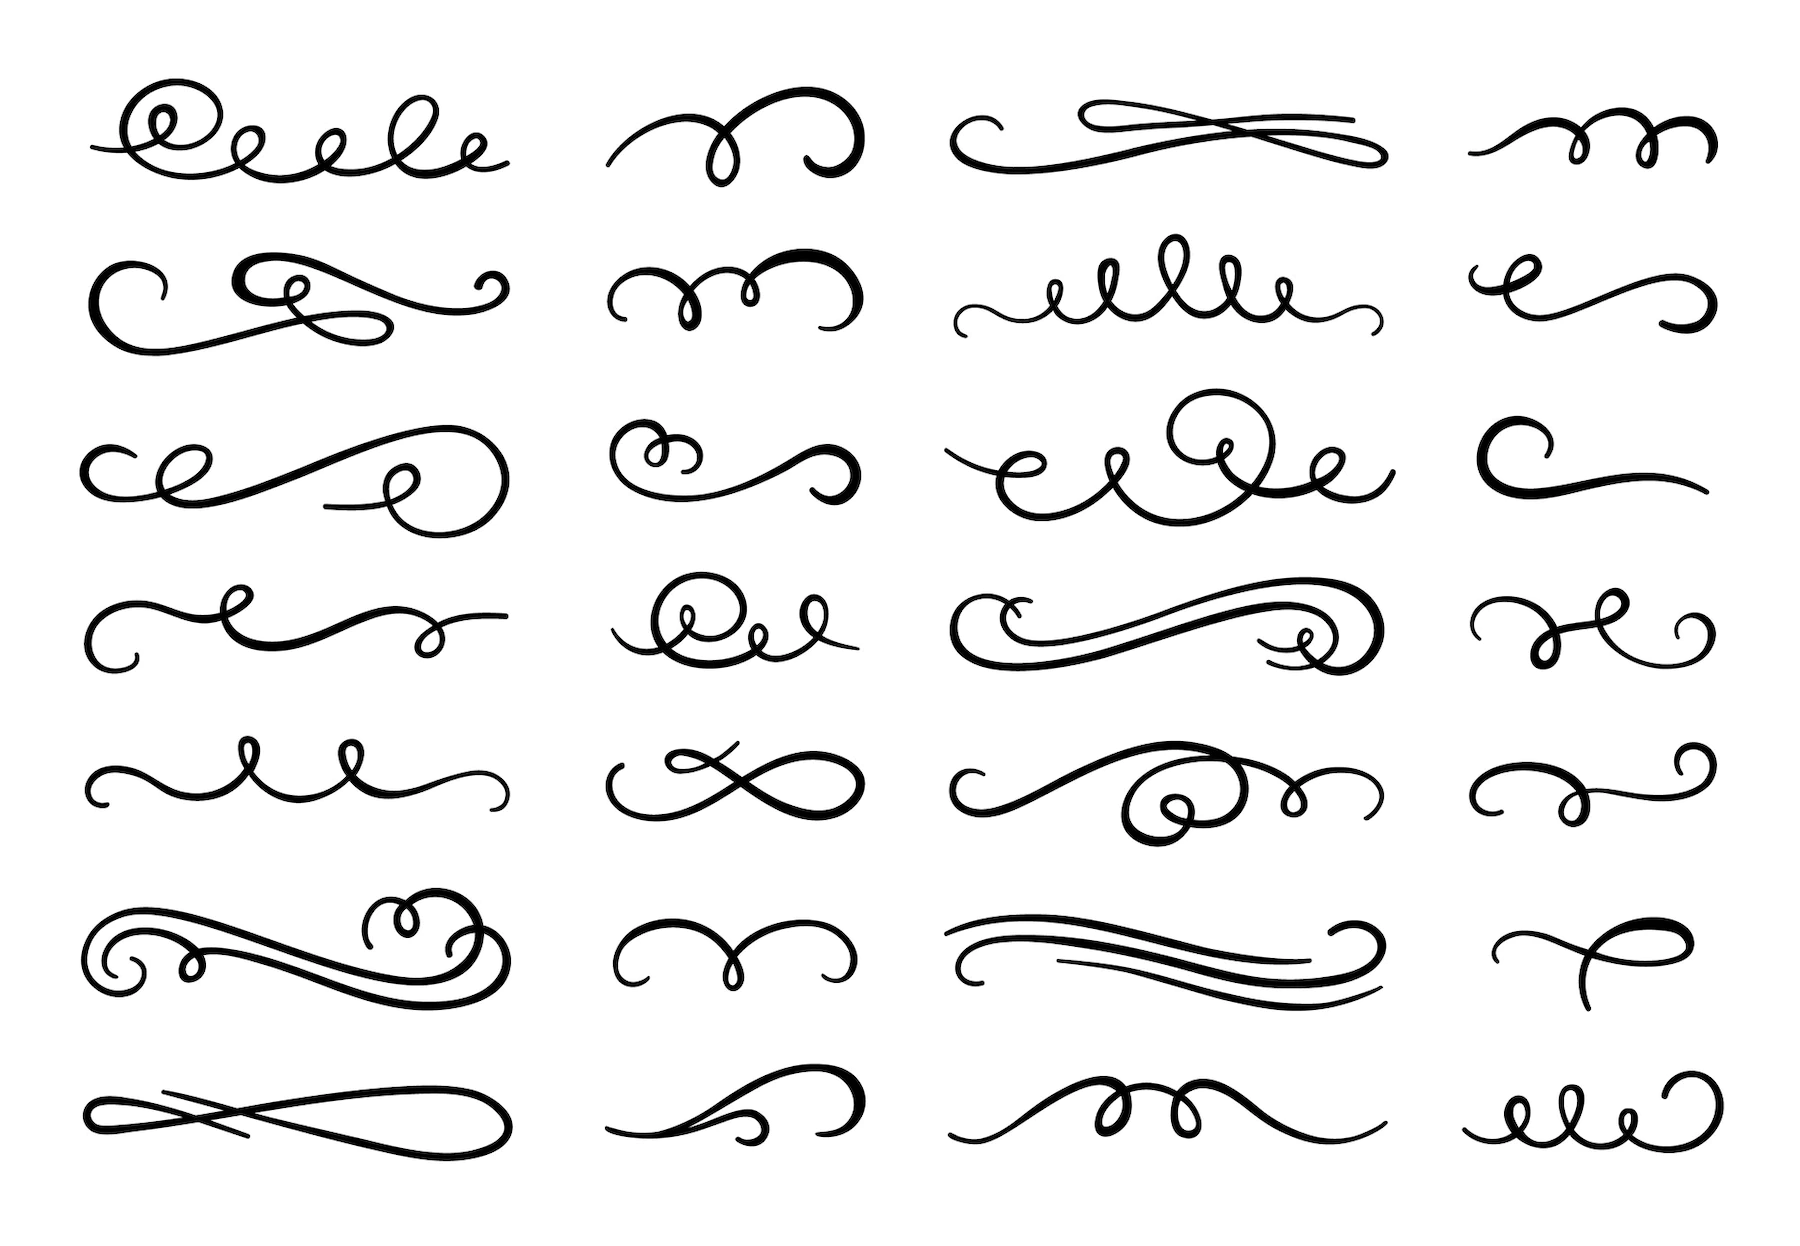 calligraphy flourish decorative flourishes ornament ornamental swirl vintage scrolls curls 102902 2286